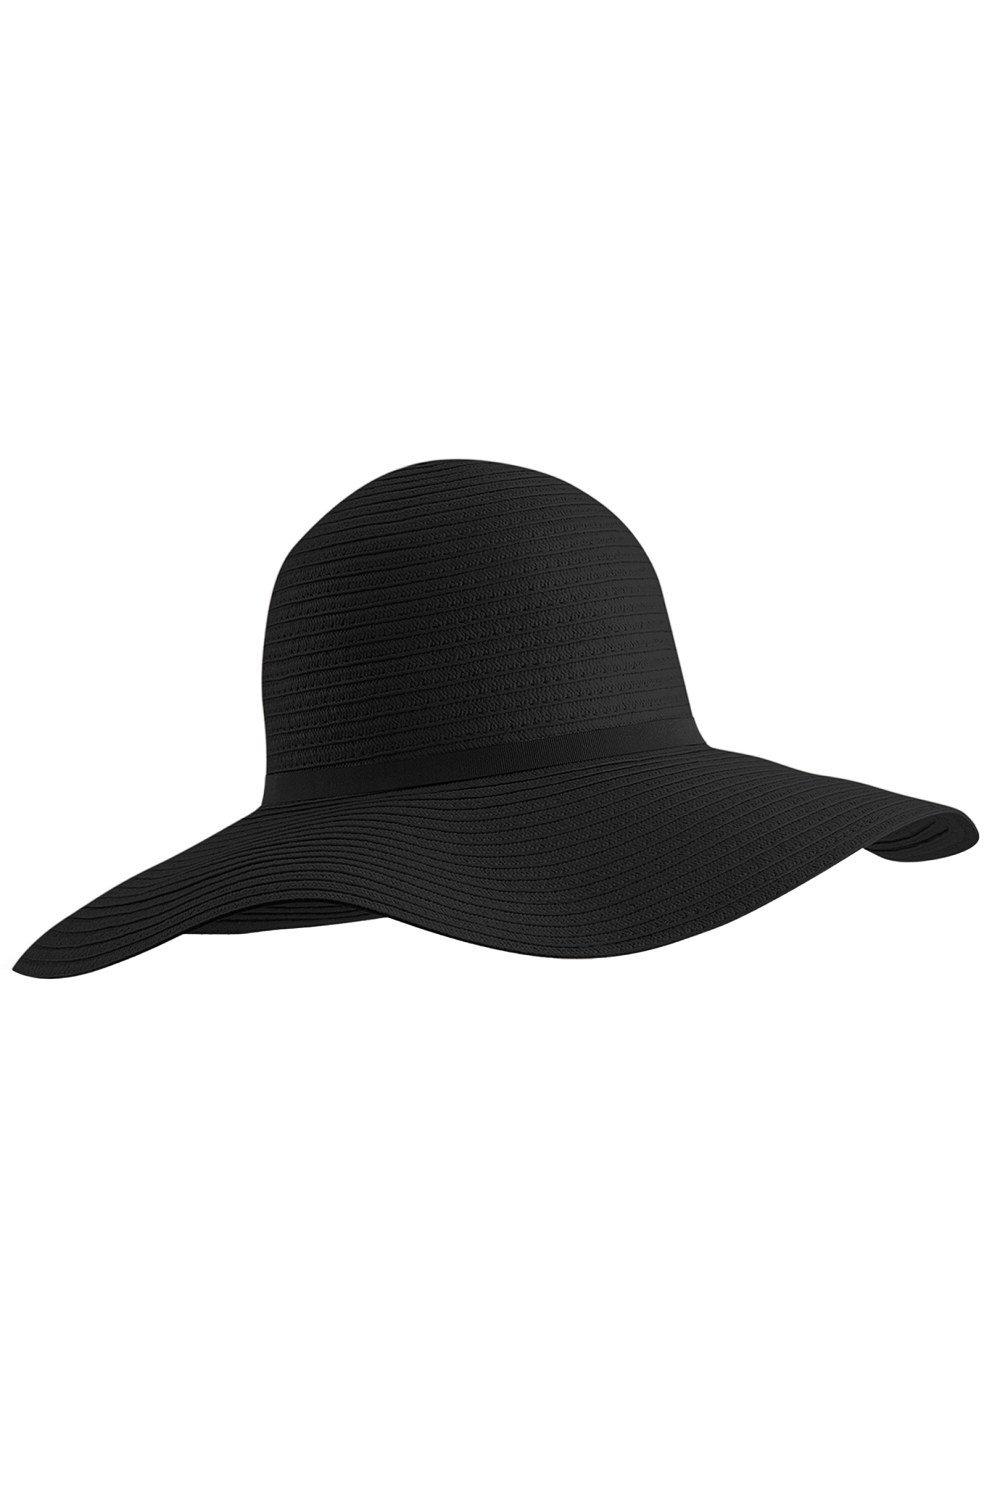 Шляпа от солнца с широкими полями Marbella Beechfield, черный панама с широкими полями для мужчин шляпа с защитой от уф излучения для активного отдыха рыбалки походов козырек от солнца дышащая кепка